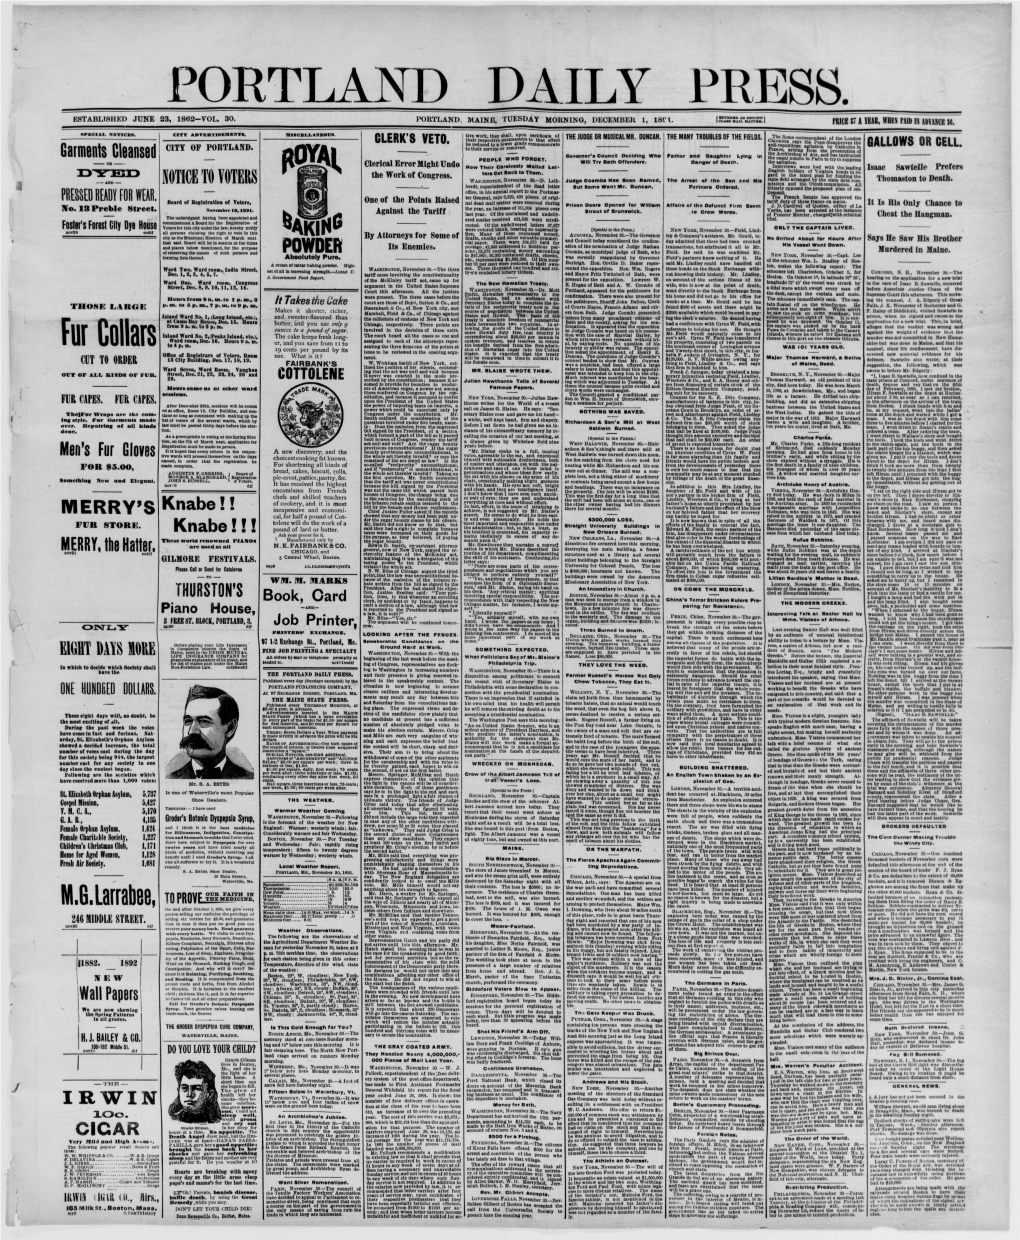 Portland Daily Press: December 01,1891